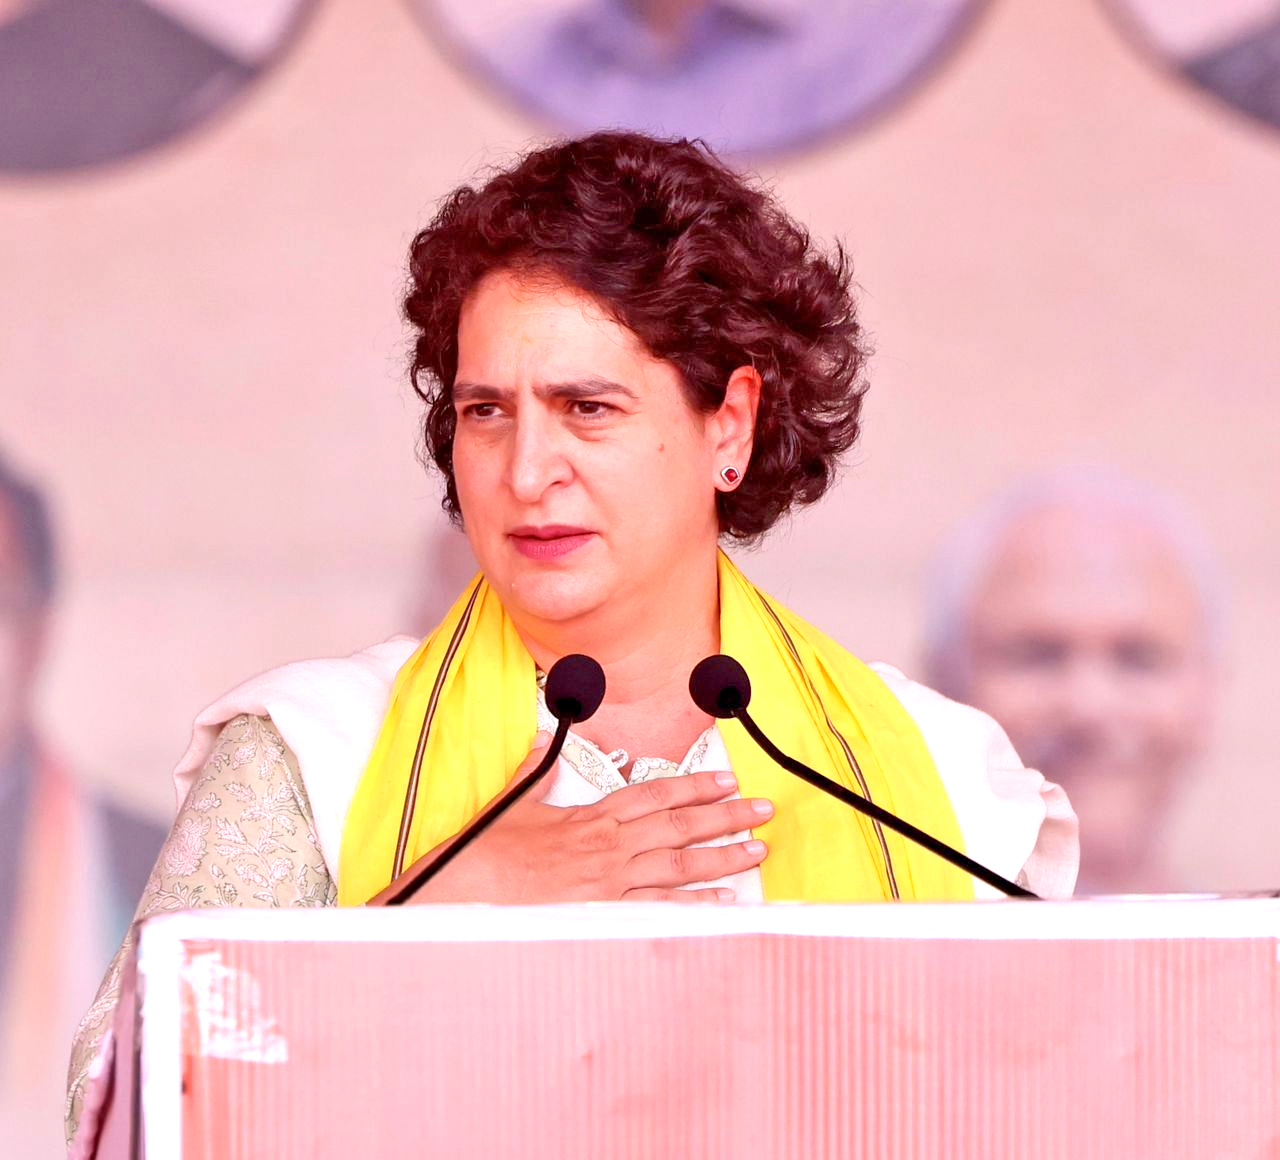 Priyanka Gandhi unveils bold education and economic reforms